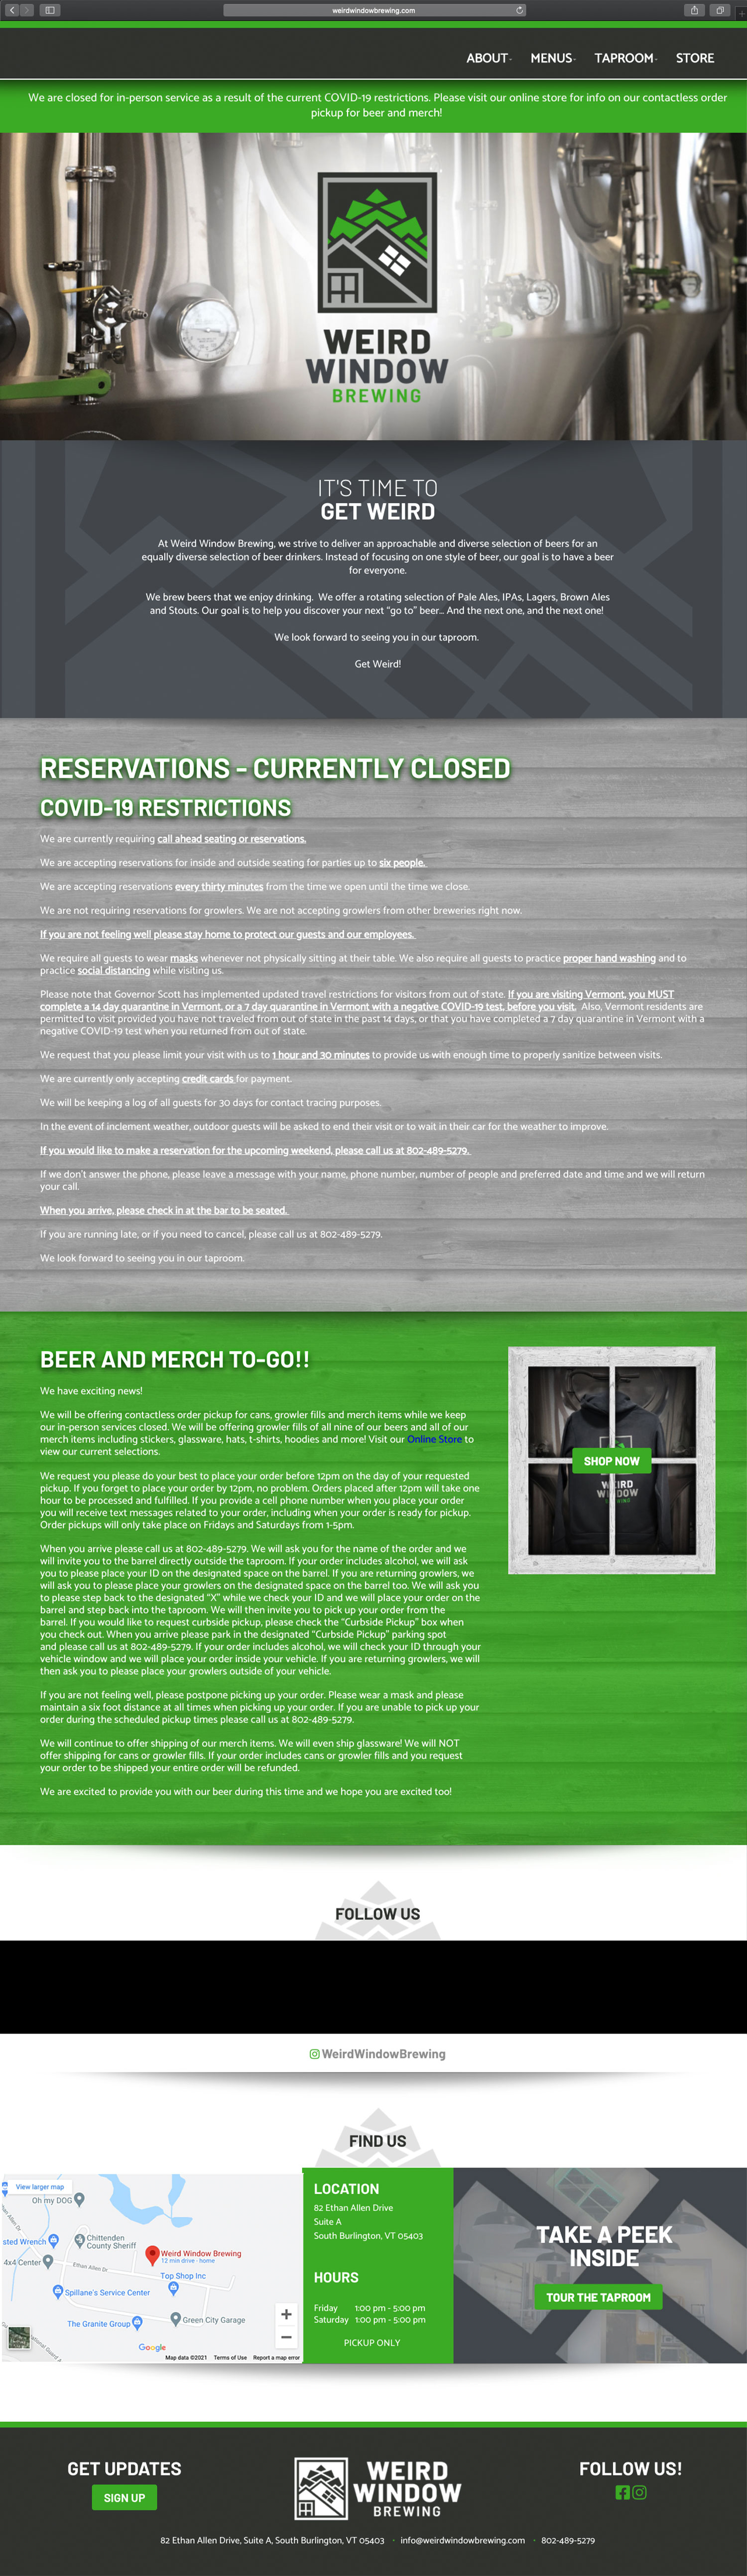 Website design and website development for Weird Window Brewing - homepage view.